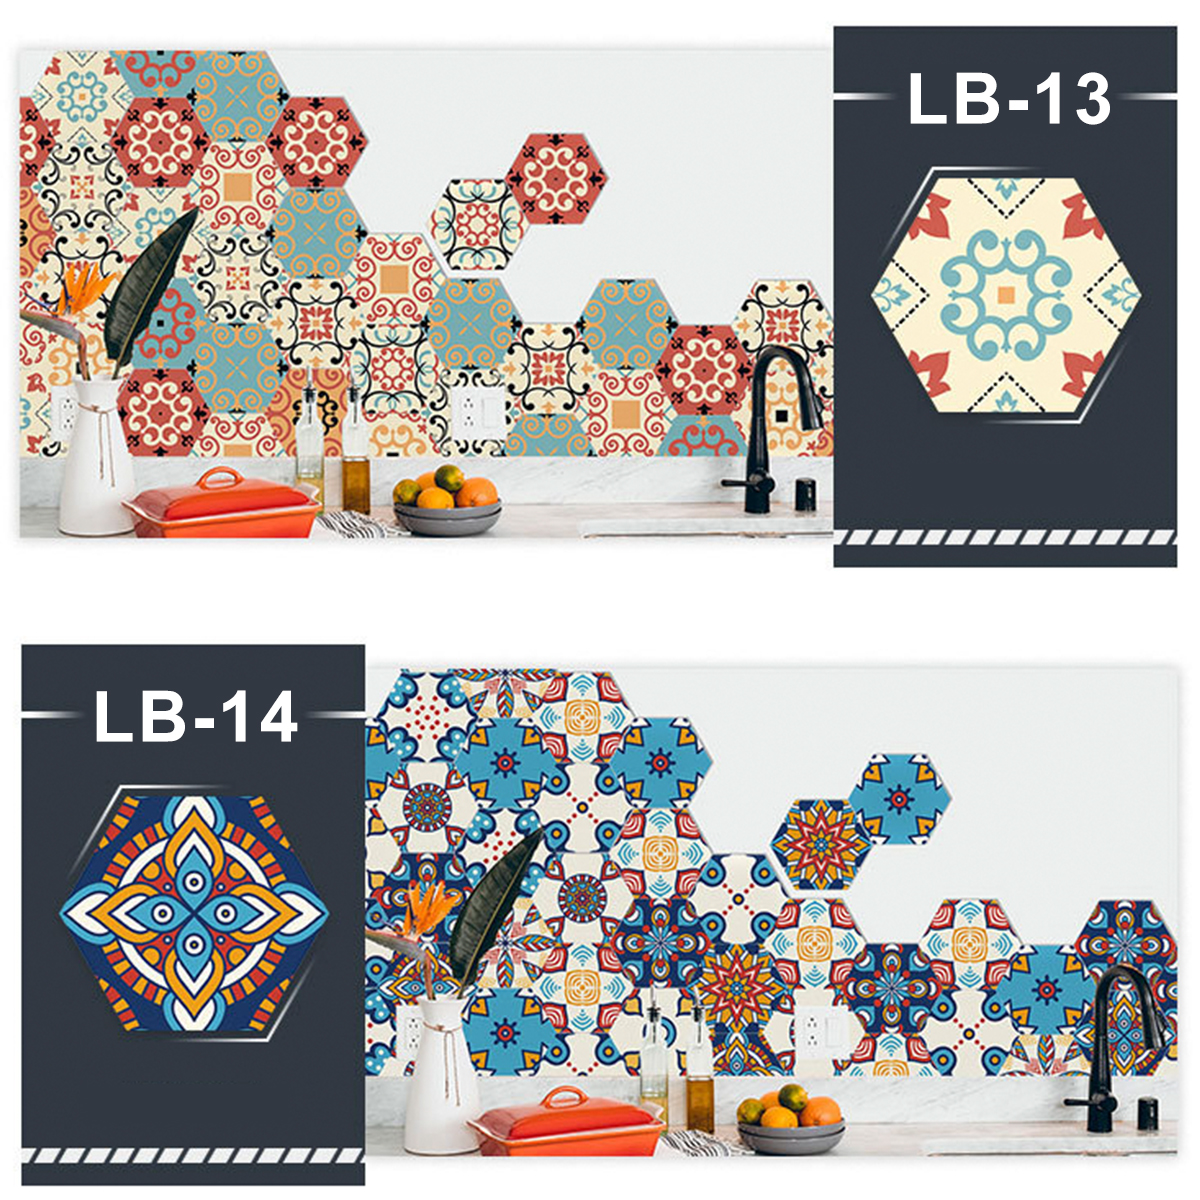 Hexagonal-Floor-Stickers-Special-Shaped-Tile-Stickers-Self-Adhesive-Bathroom-Toilet-Waterproof-And-W-1859007-9